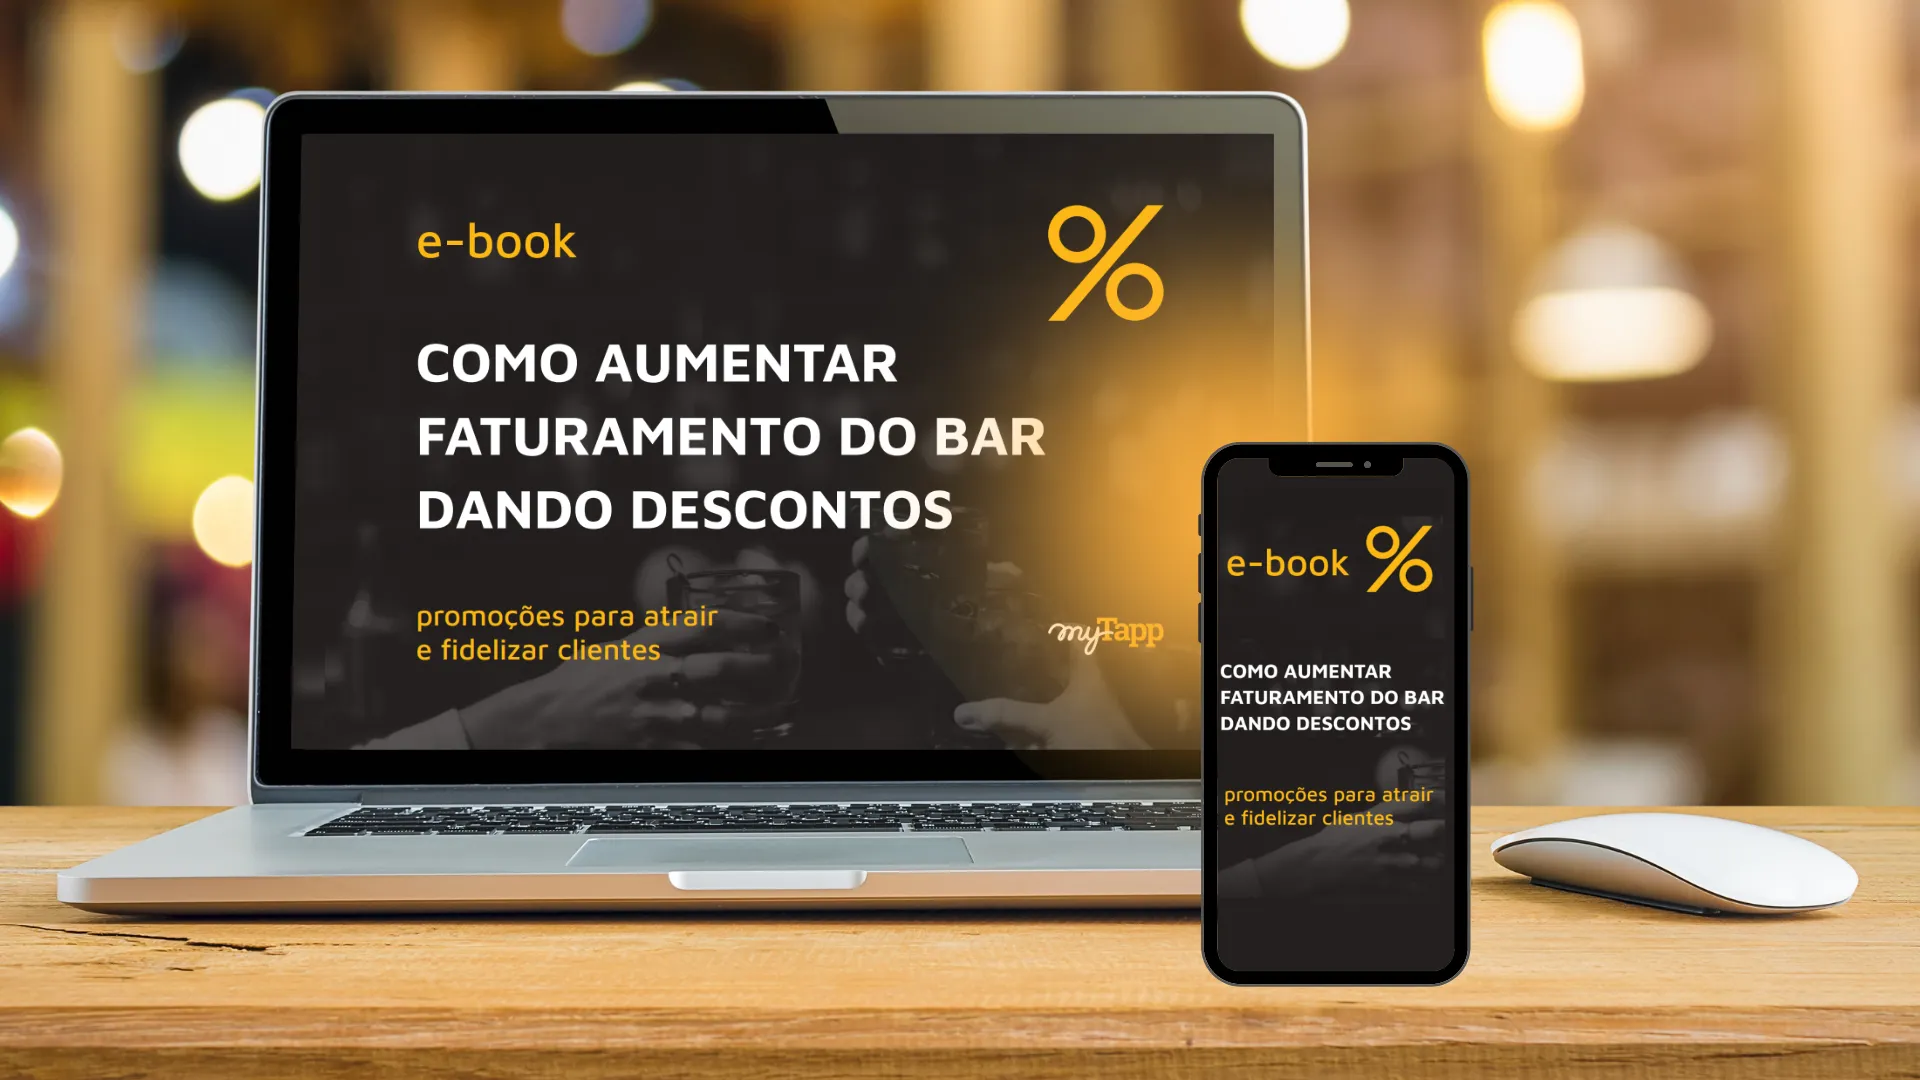 ebook mytapp - Como aumentar faturamento do bar dando descontos